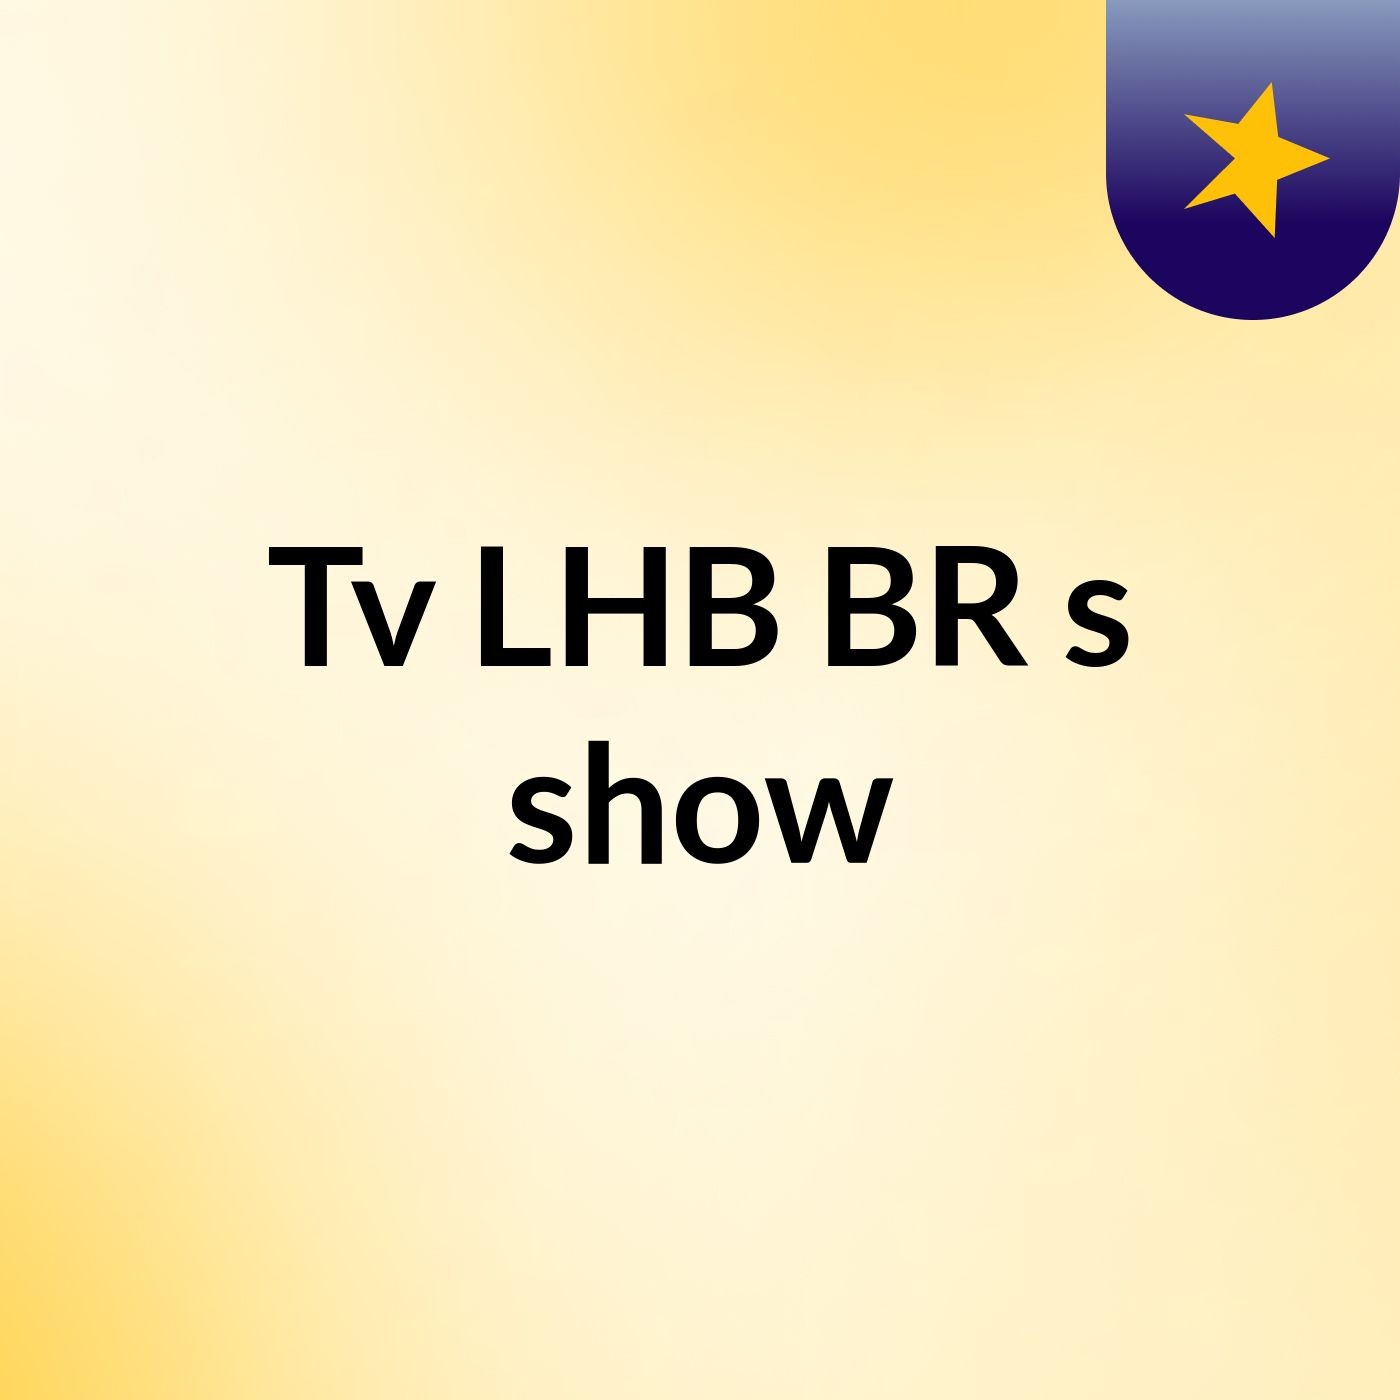 Tv LHB BR's show